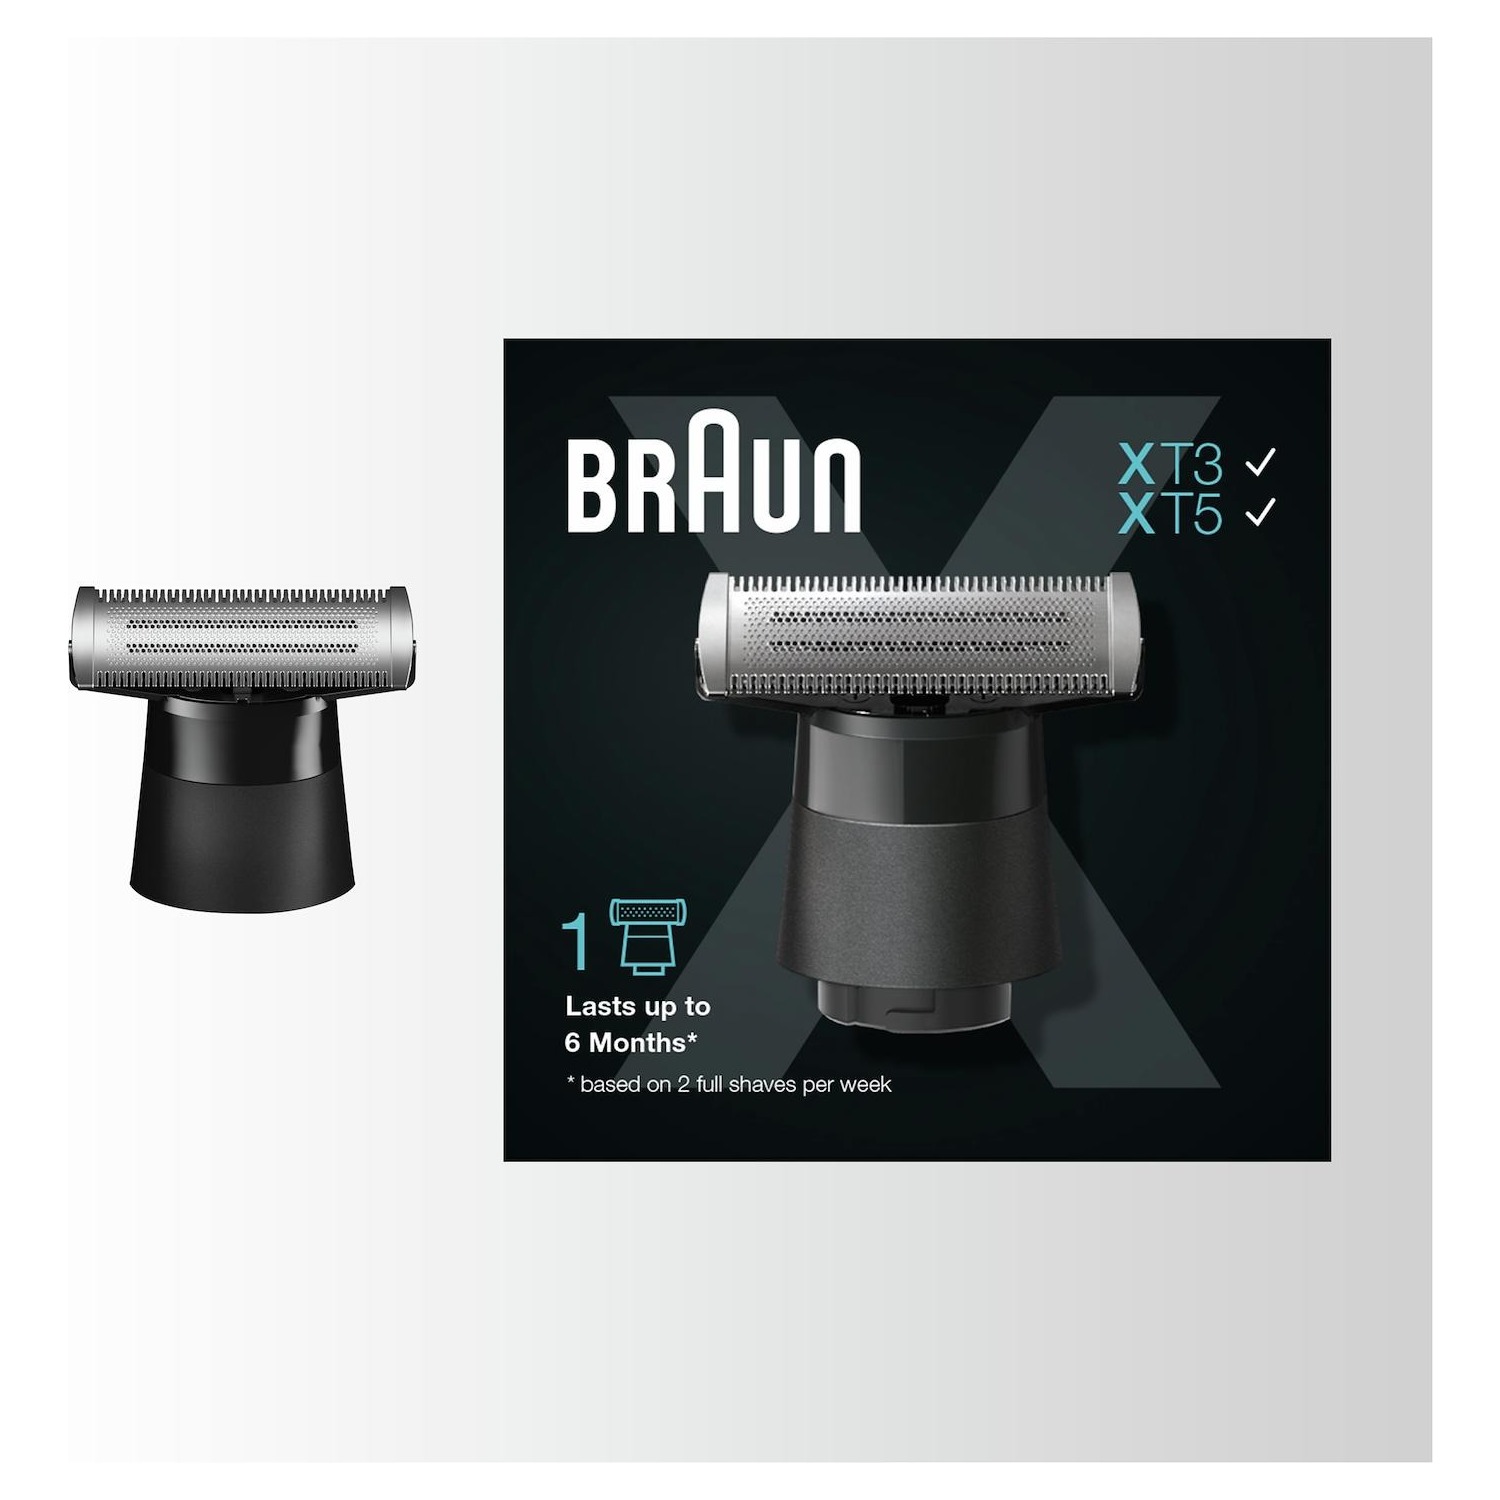 Immagine per Testina Braun XT10 compatibile Braun serie X      singola da DIMOStore